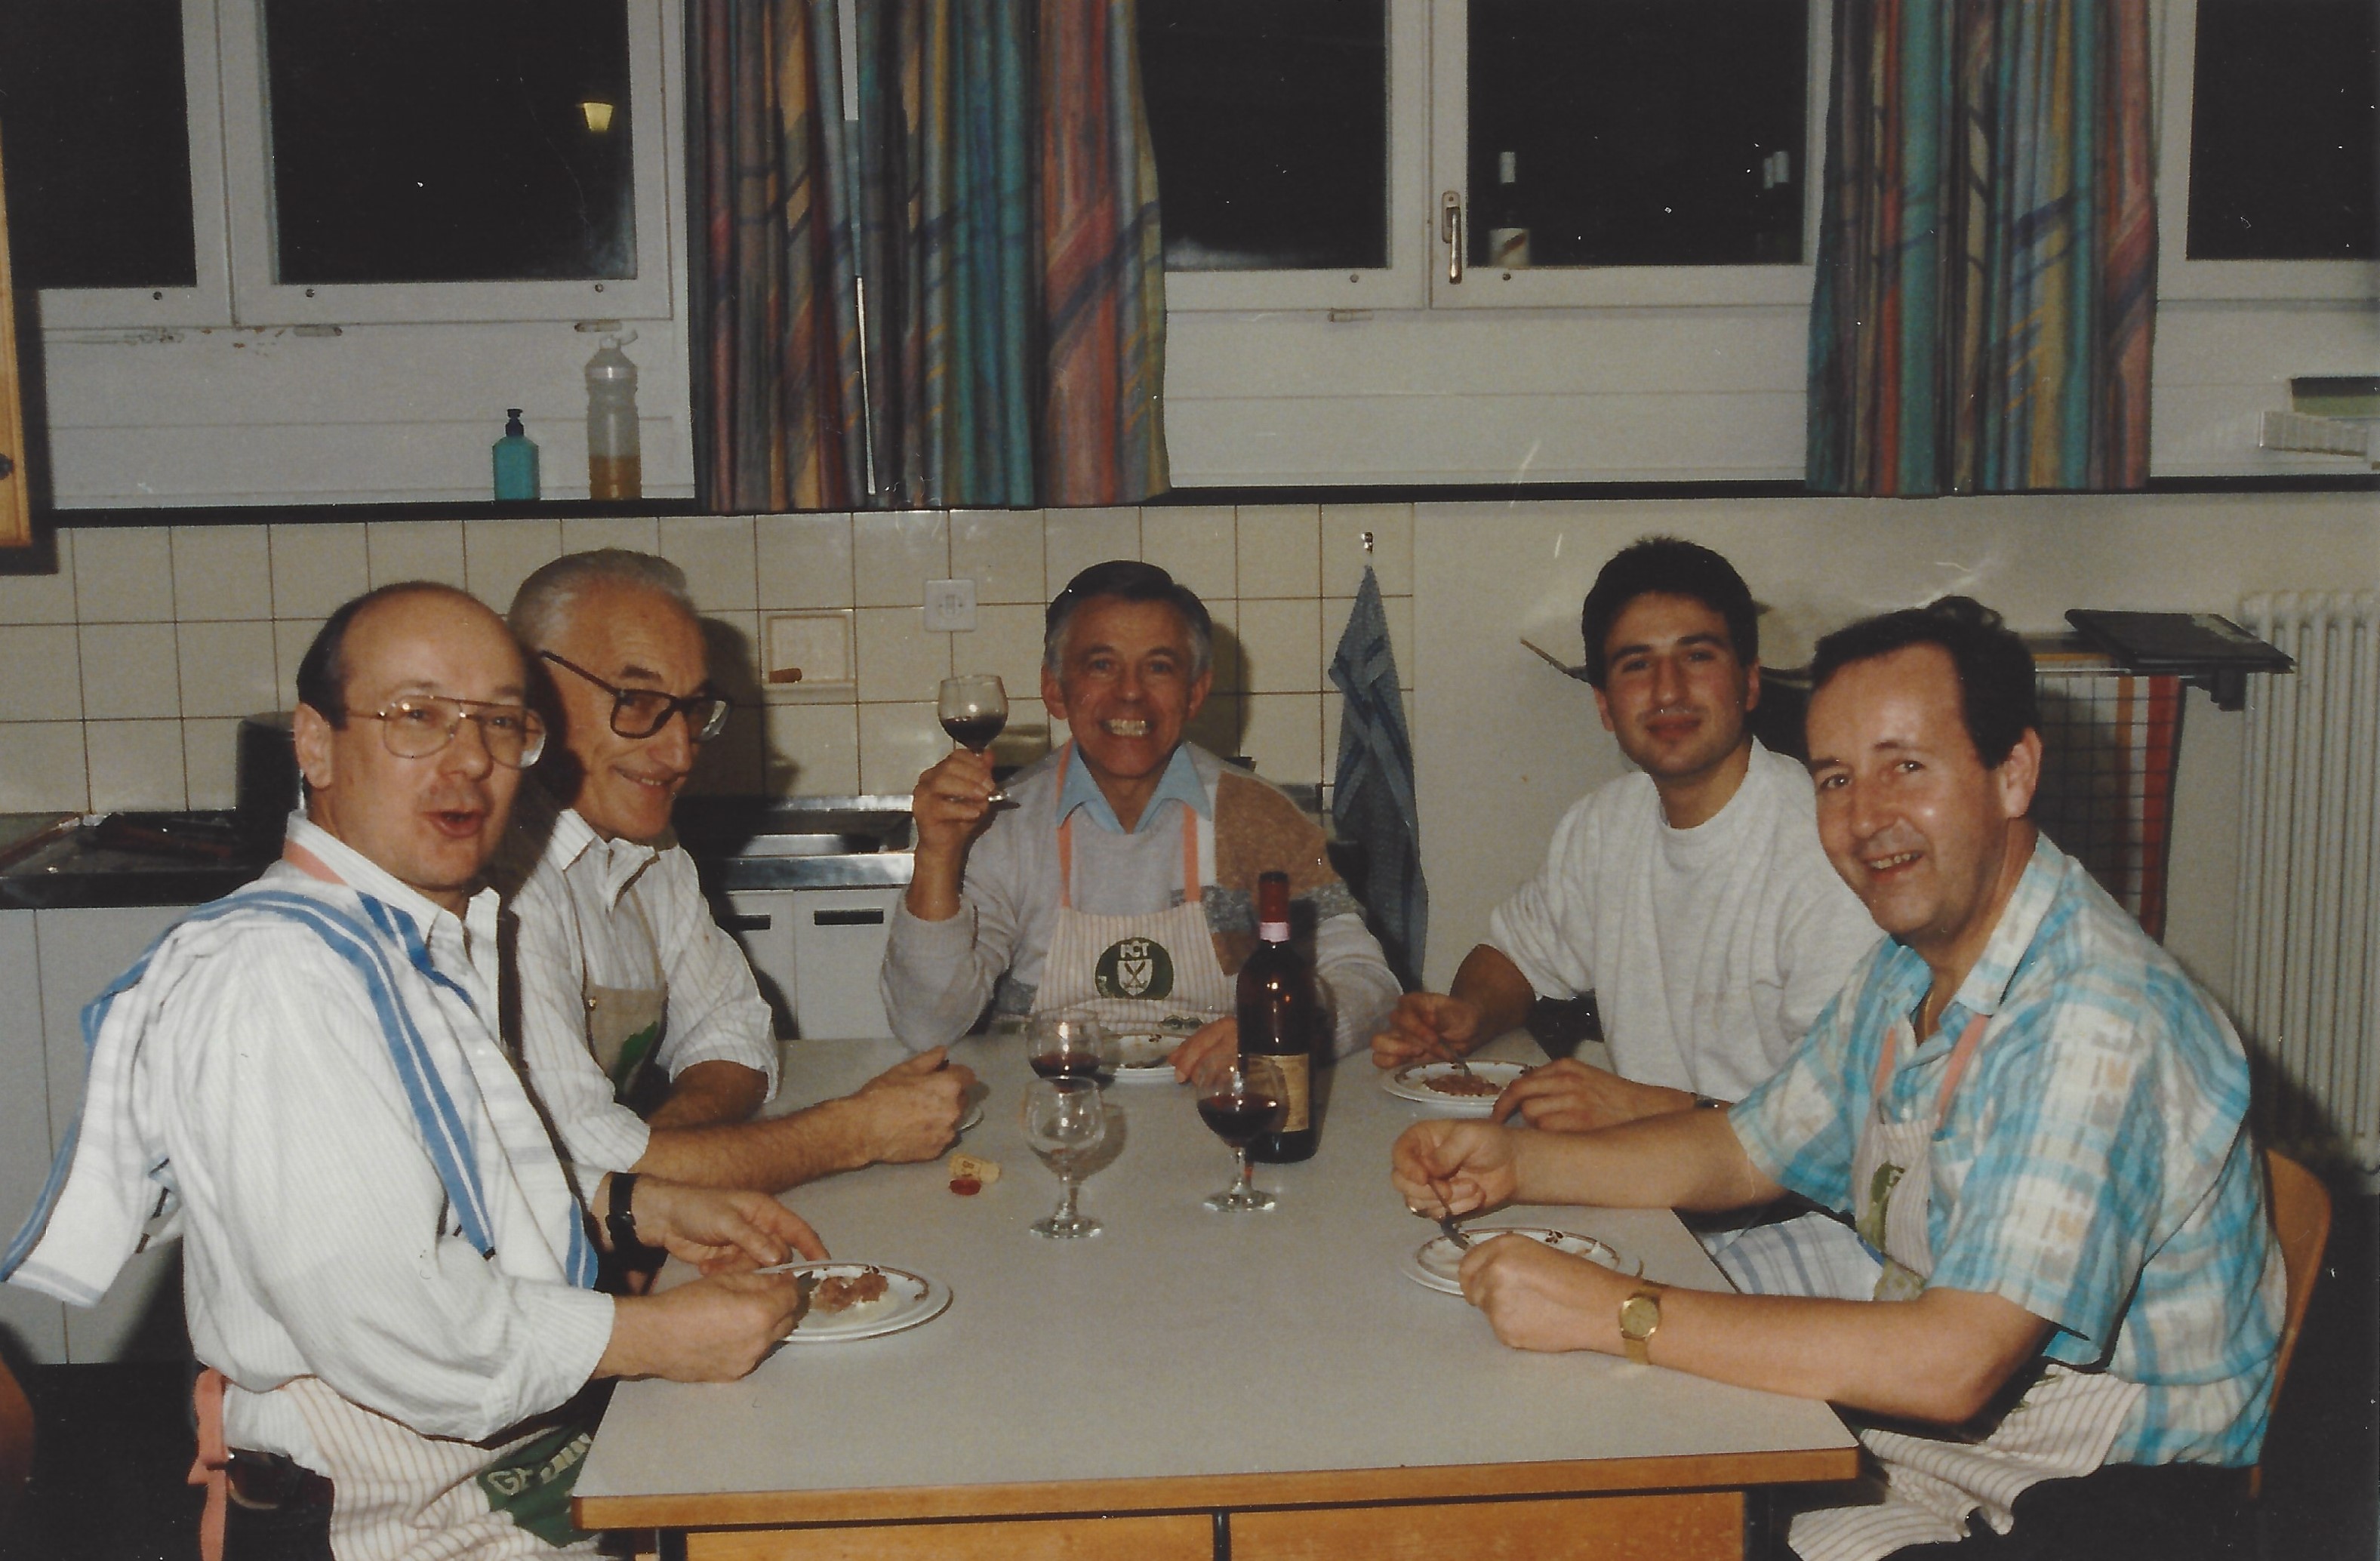 1993 - Kochkurs für Männer